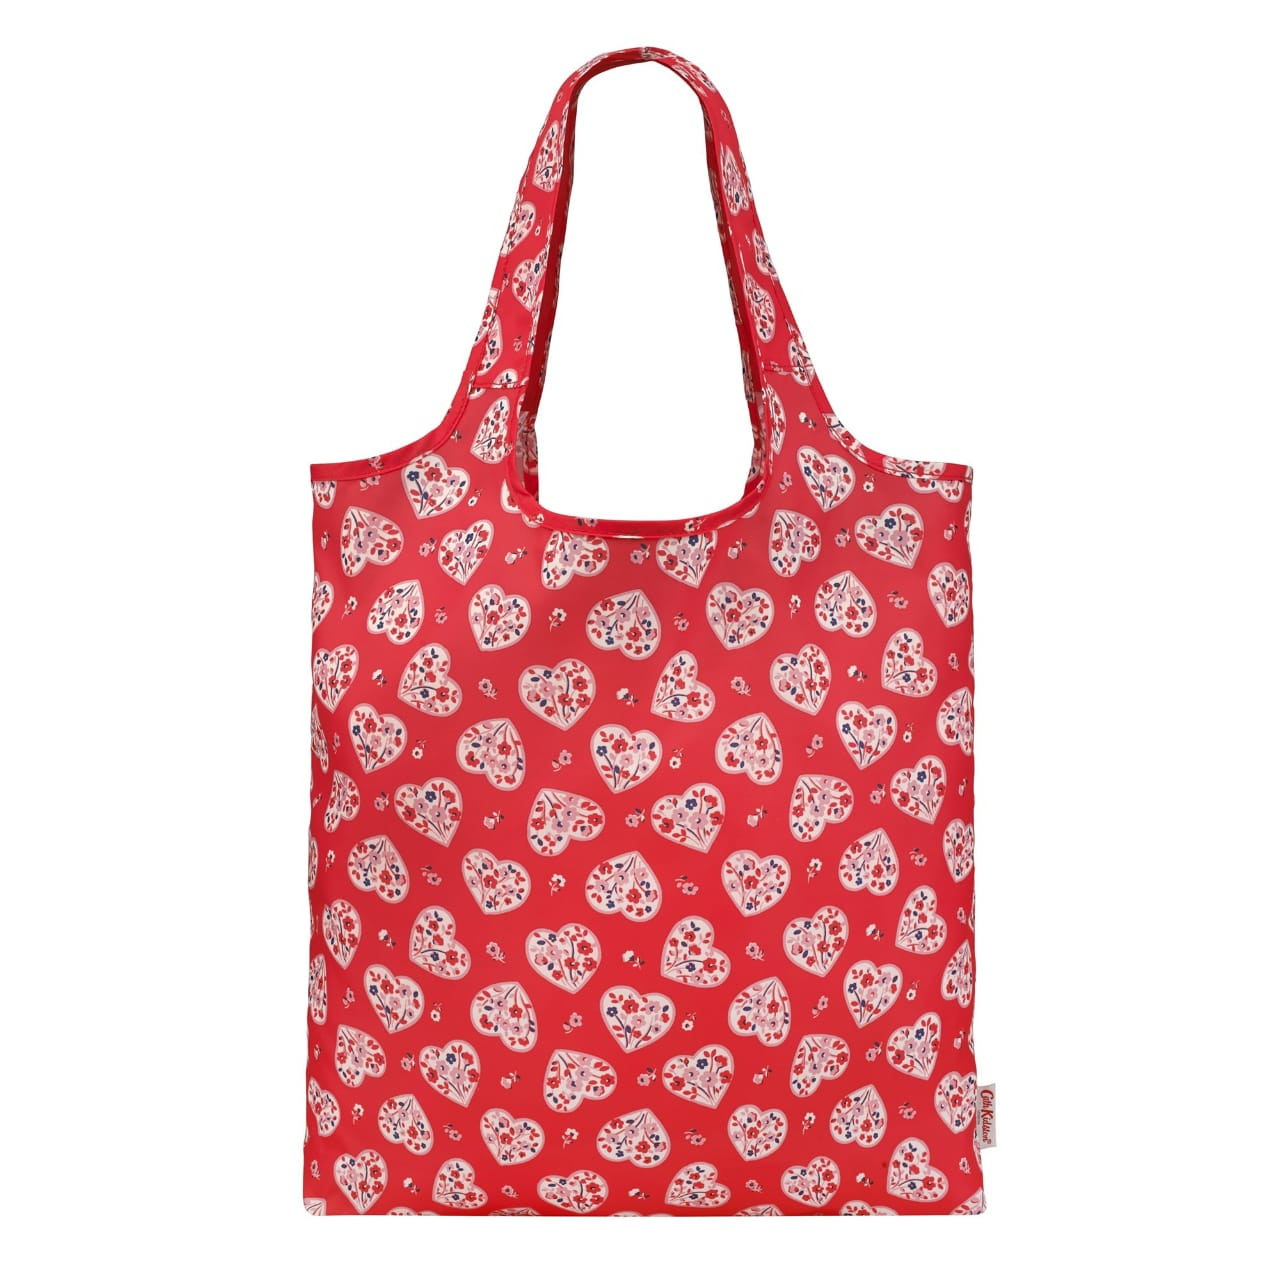 Cath Kidston Foldaway Shopper - Flower Heart Red Pink - One Size